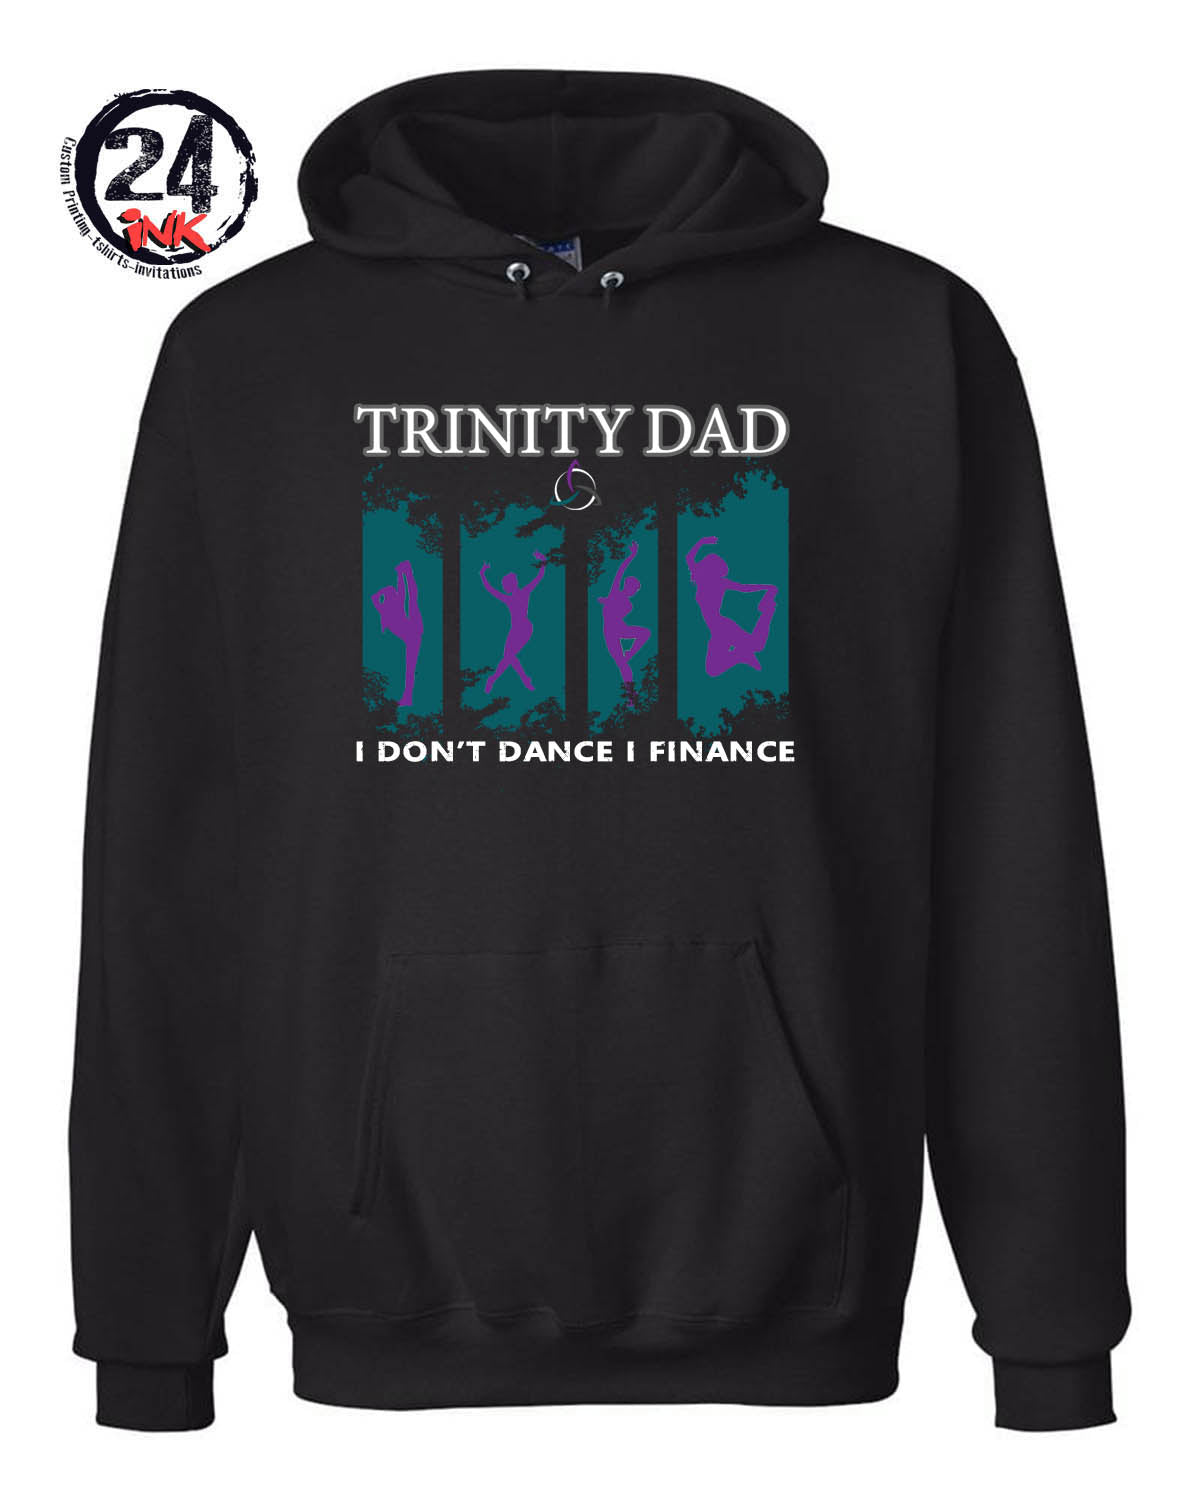 I don't dance I finance Hooded Sweatshirt